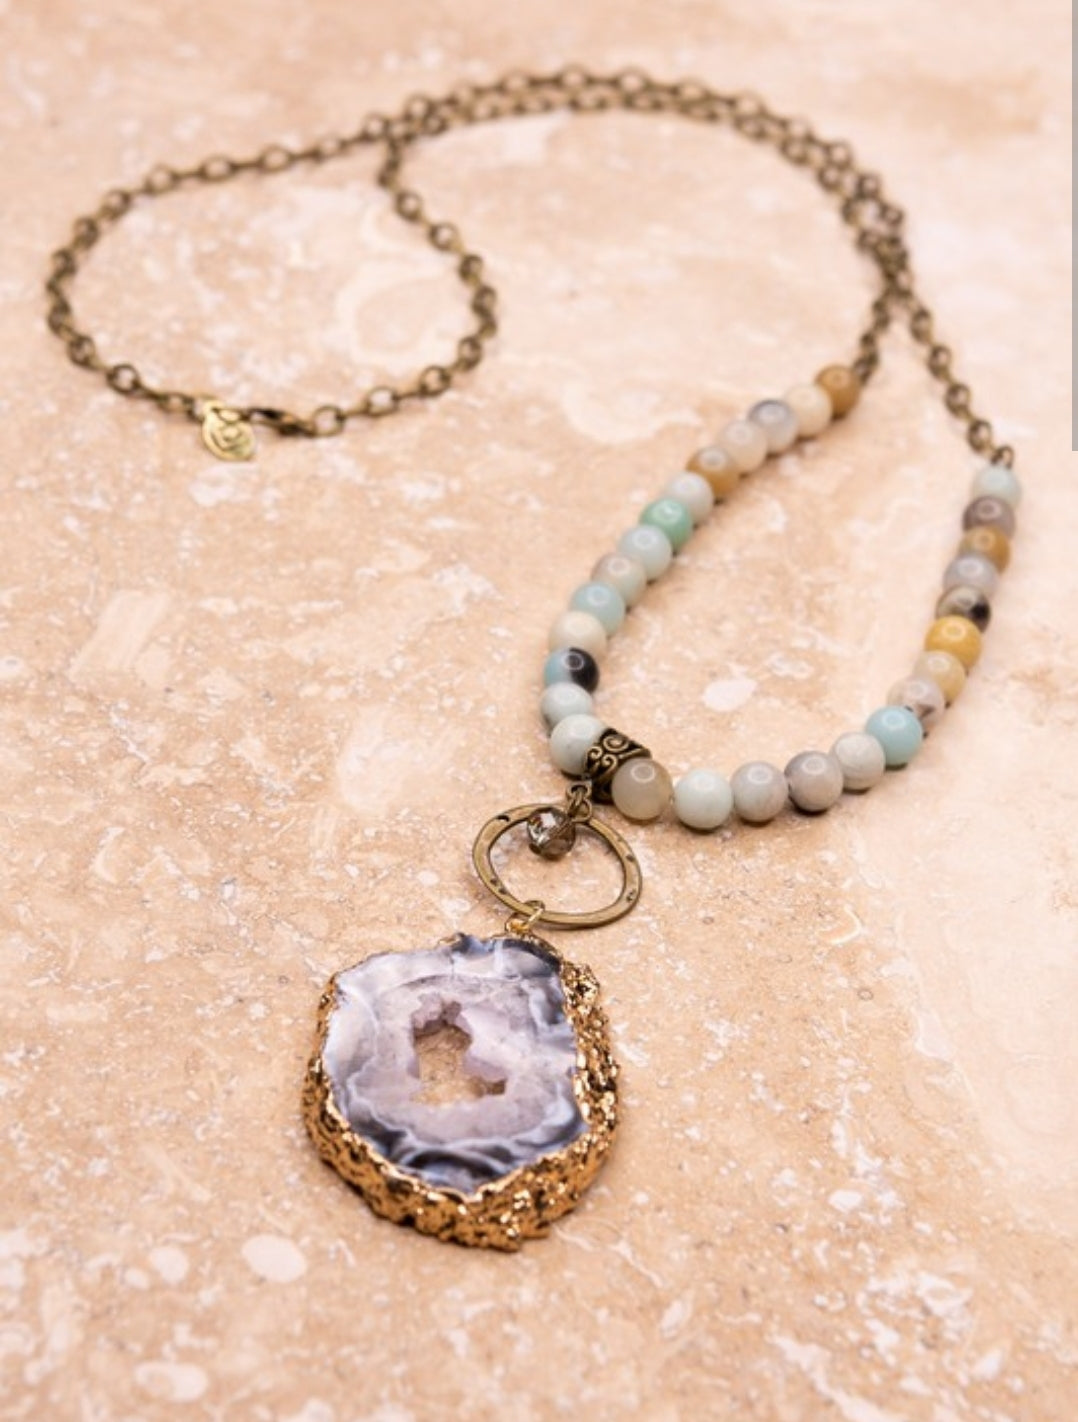 Pelican Bay pendant necklace * on sale